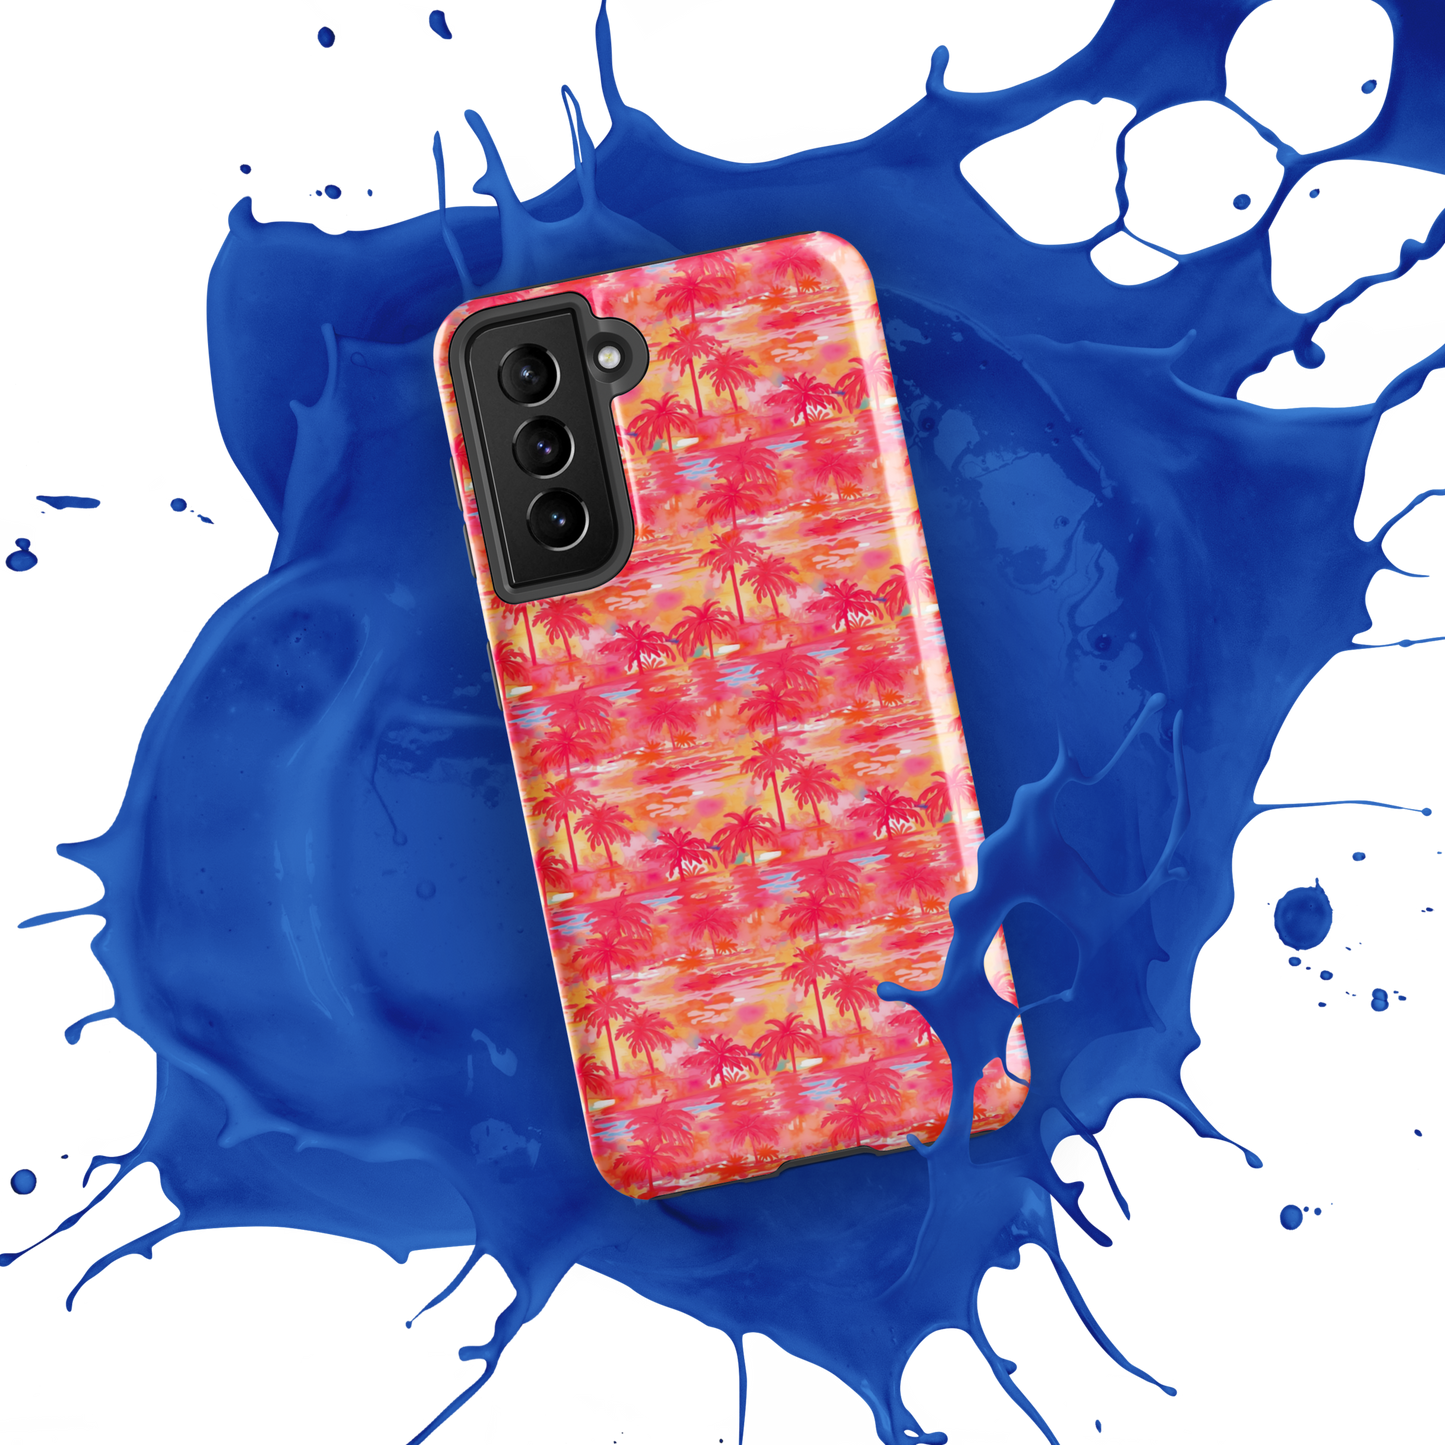 Playa Tough Case, Shockproof Phone Case,Cool Designed Phone Cases, Pocket-friendly